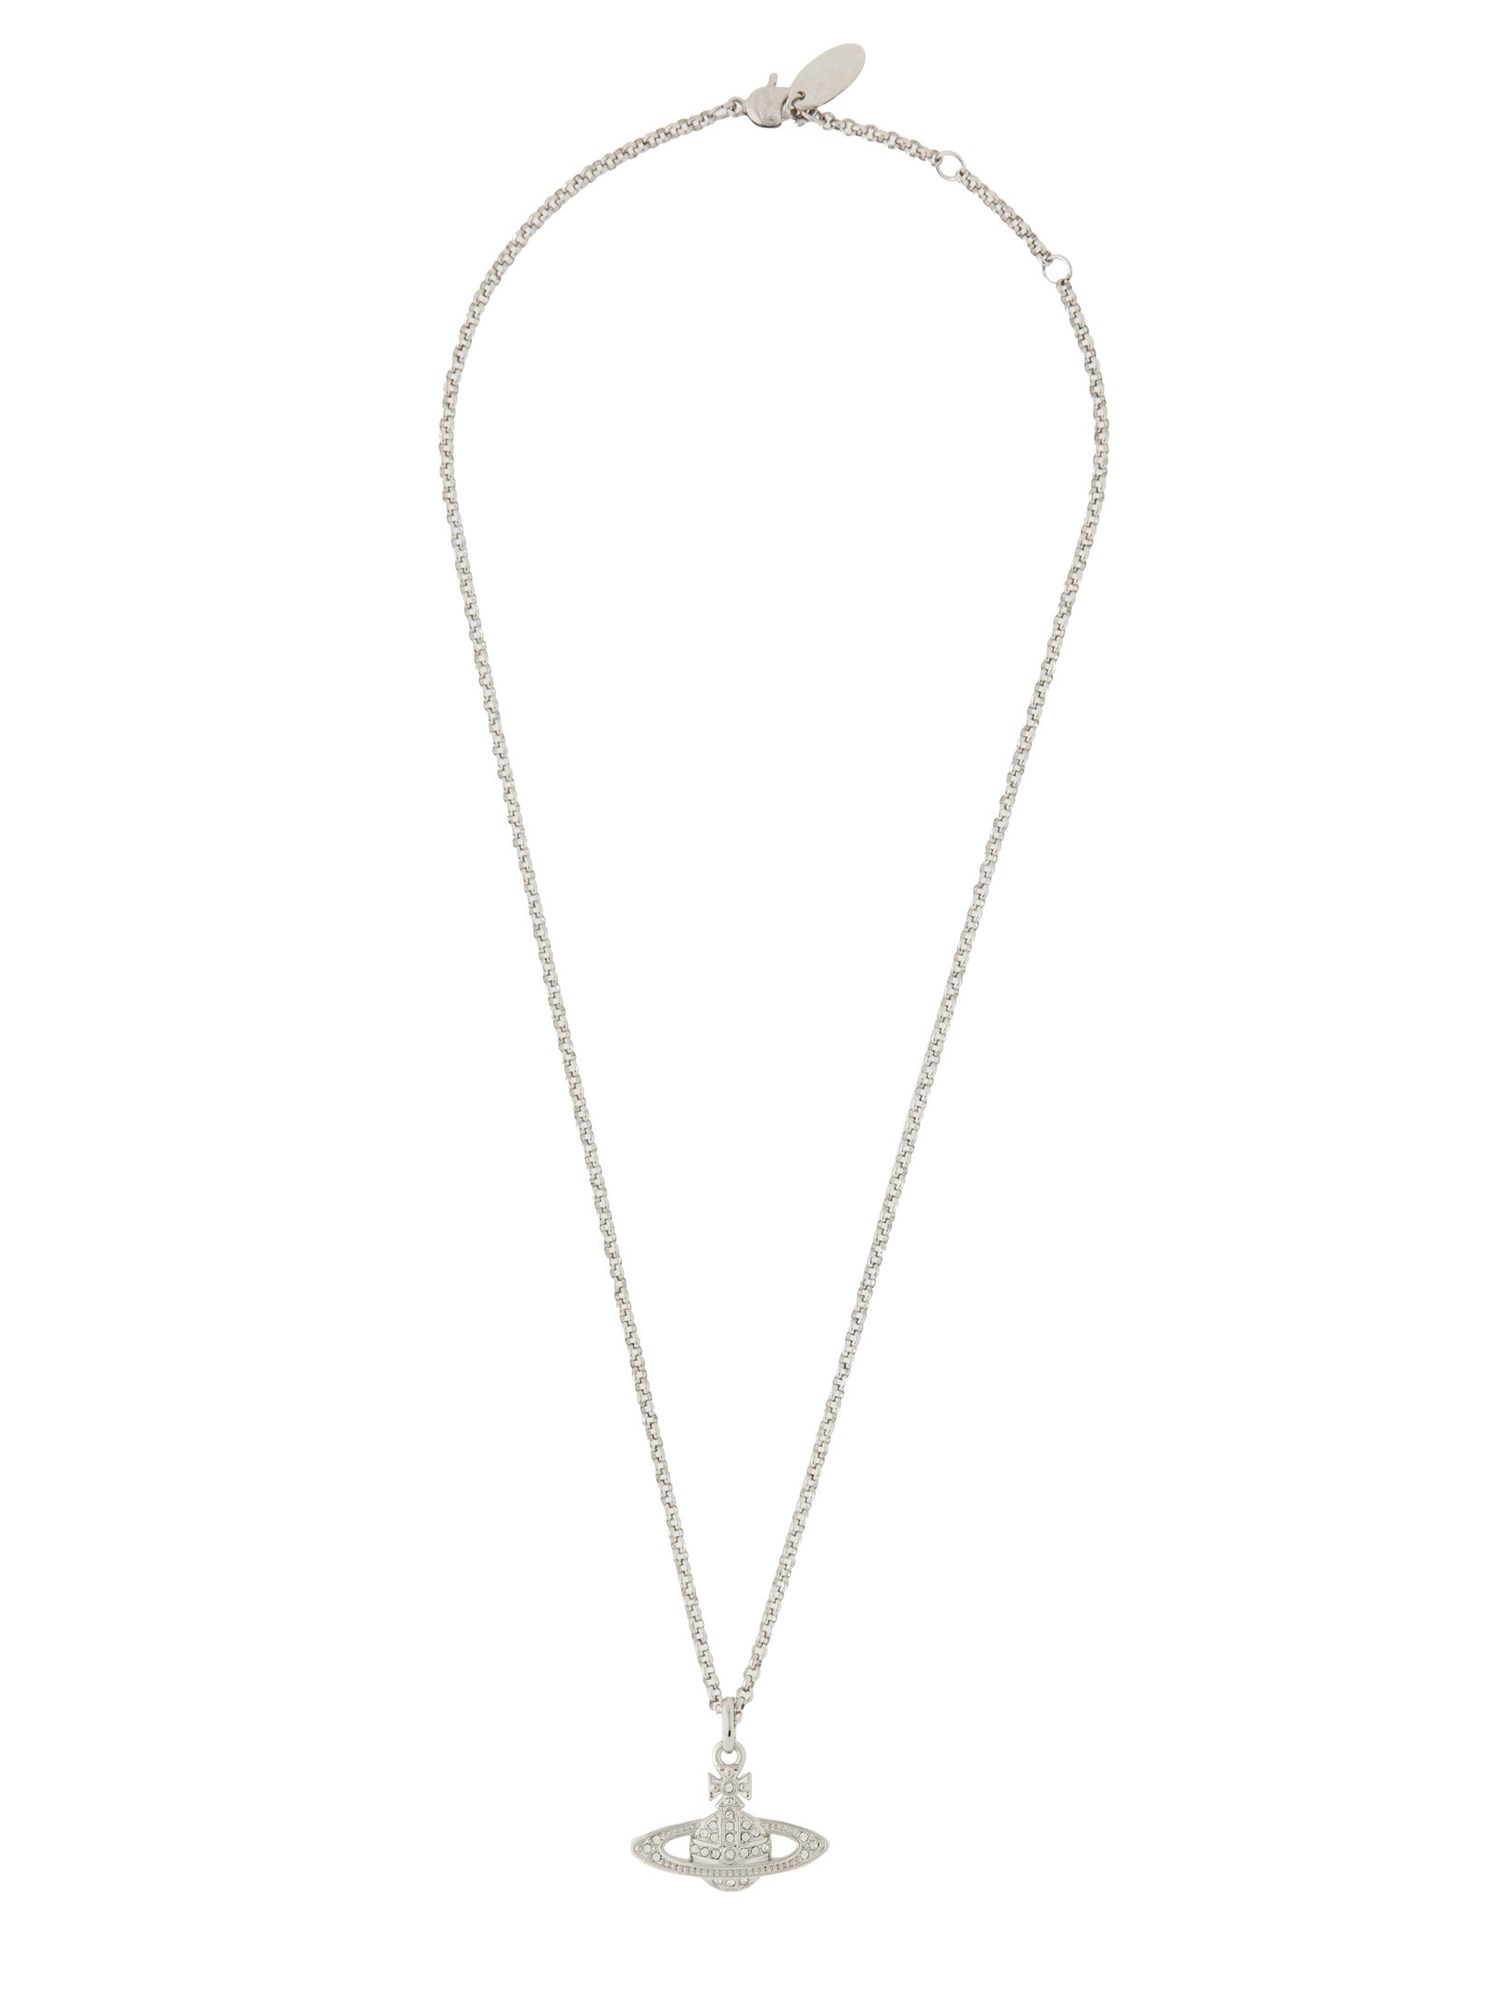 Vivienne Westwood vivienne westwood chain with mini bas relief pendant